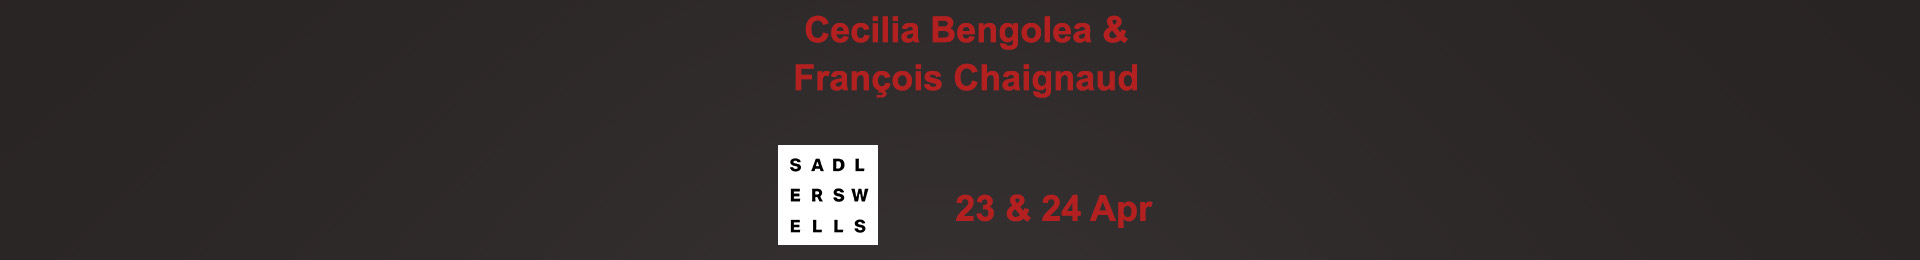 Cecilia Bengolea & François Chaignaud: DFS banner image